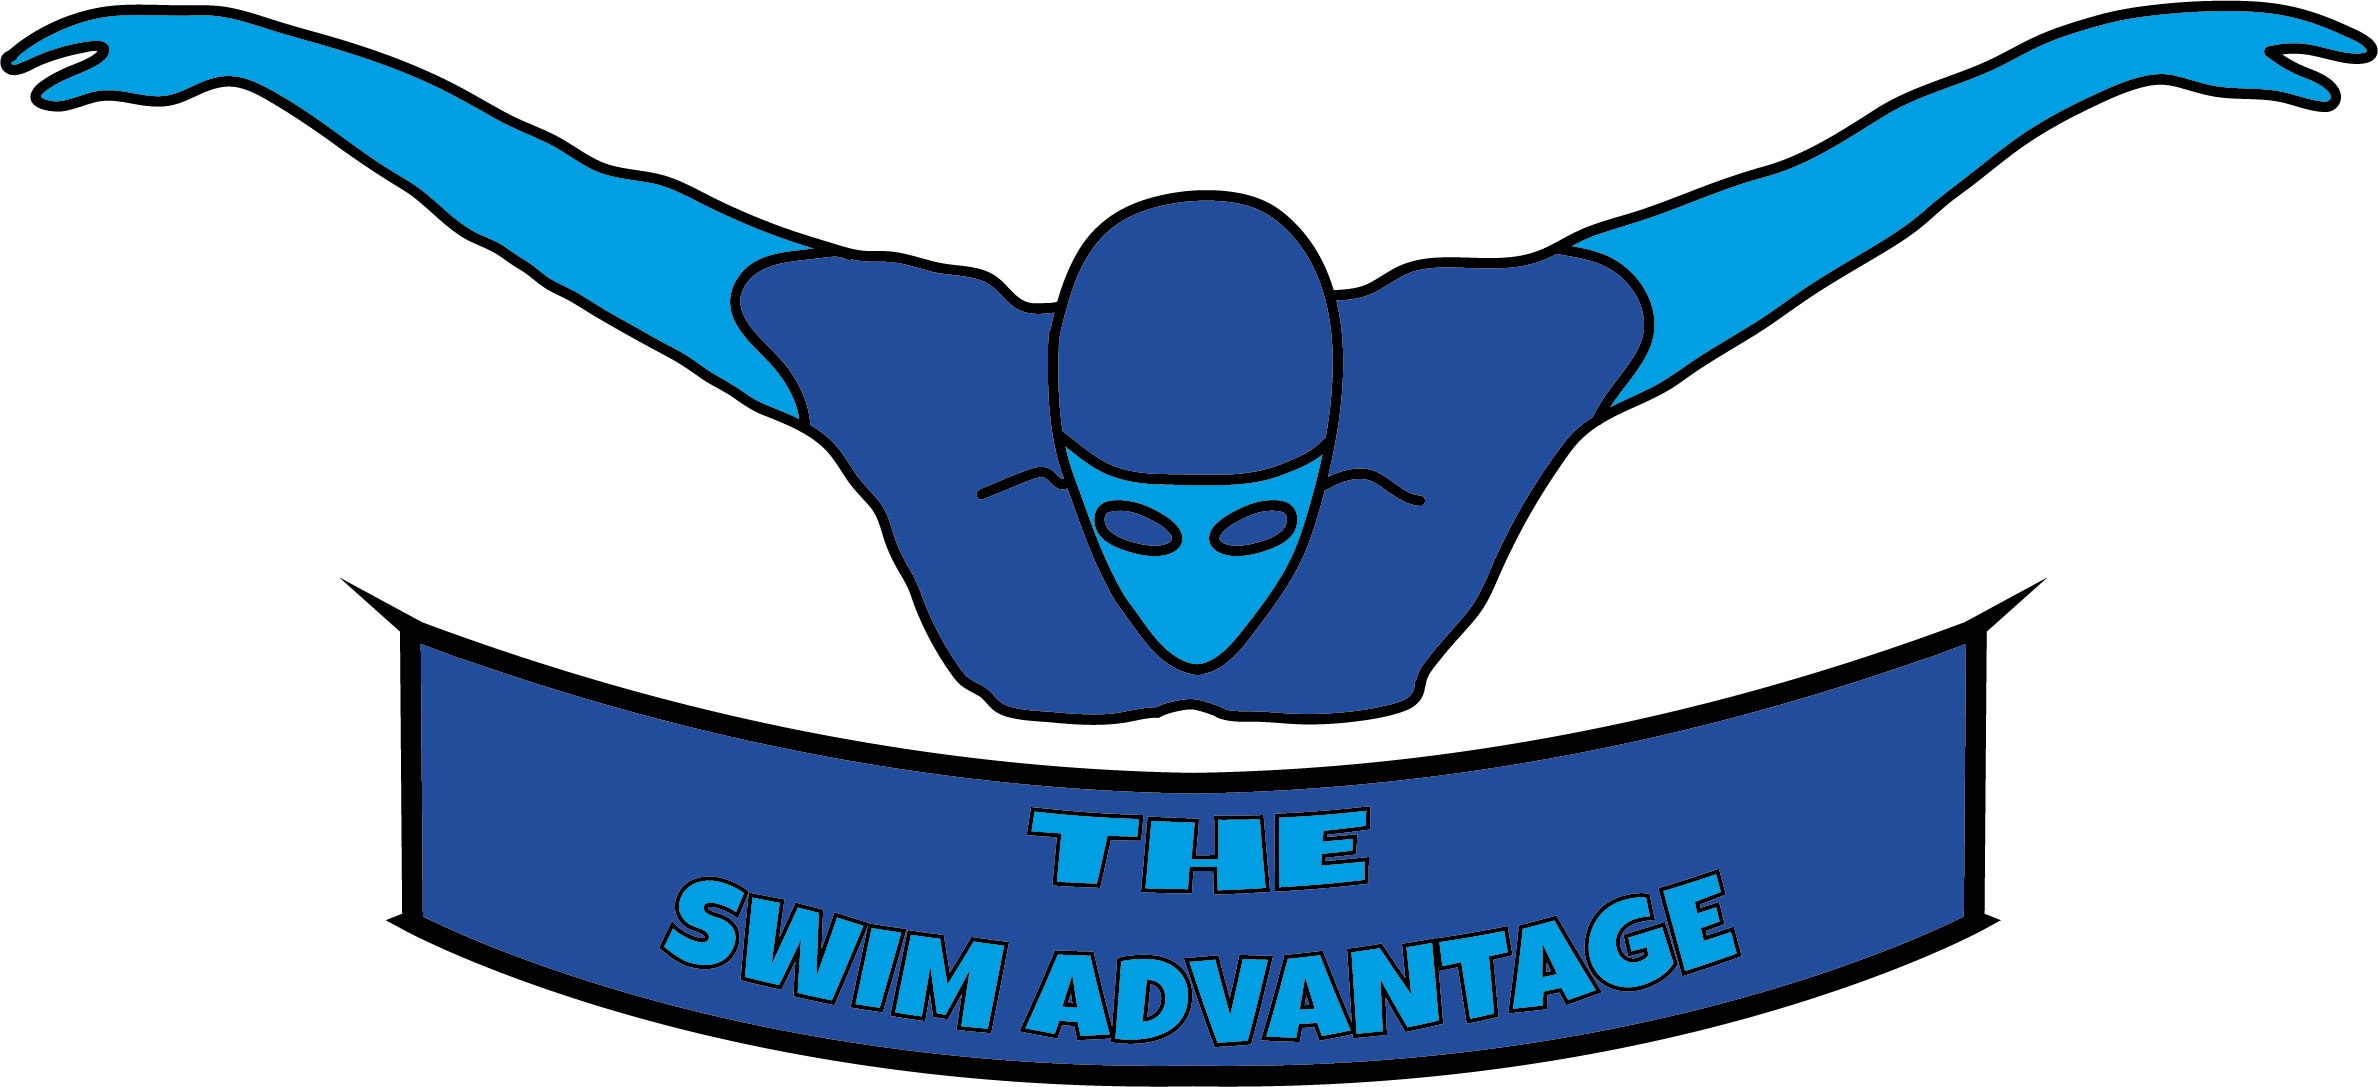 Logo Design entry 2151559 submitted by arfiantoputra13 to the Logo Design for The Swim Advantage.com run by dri$1170